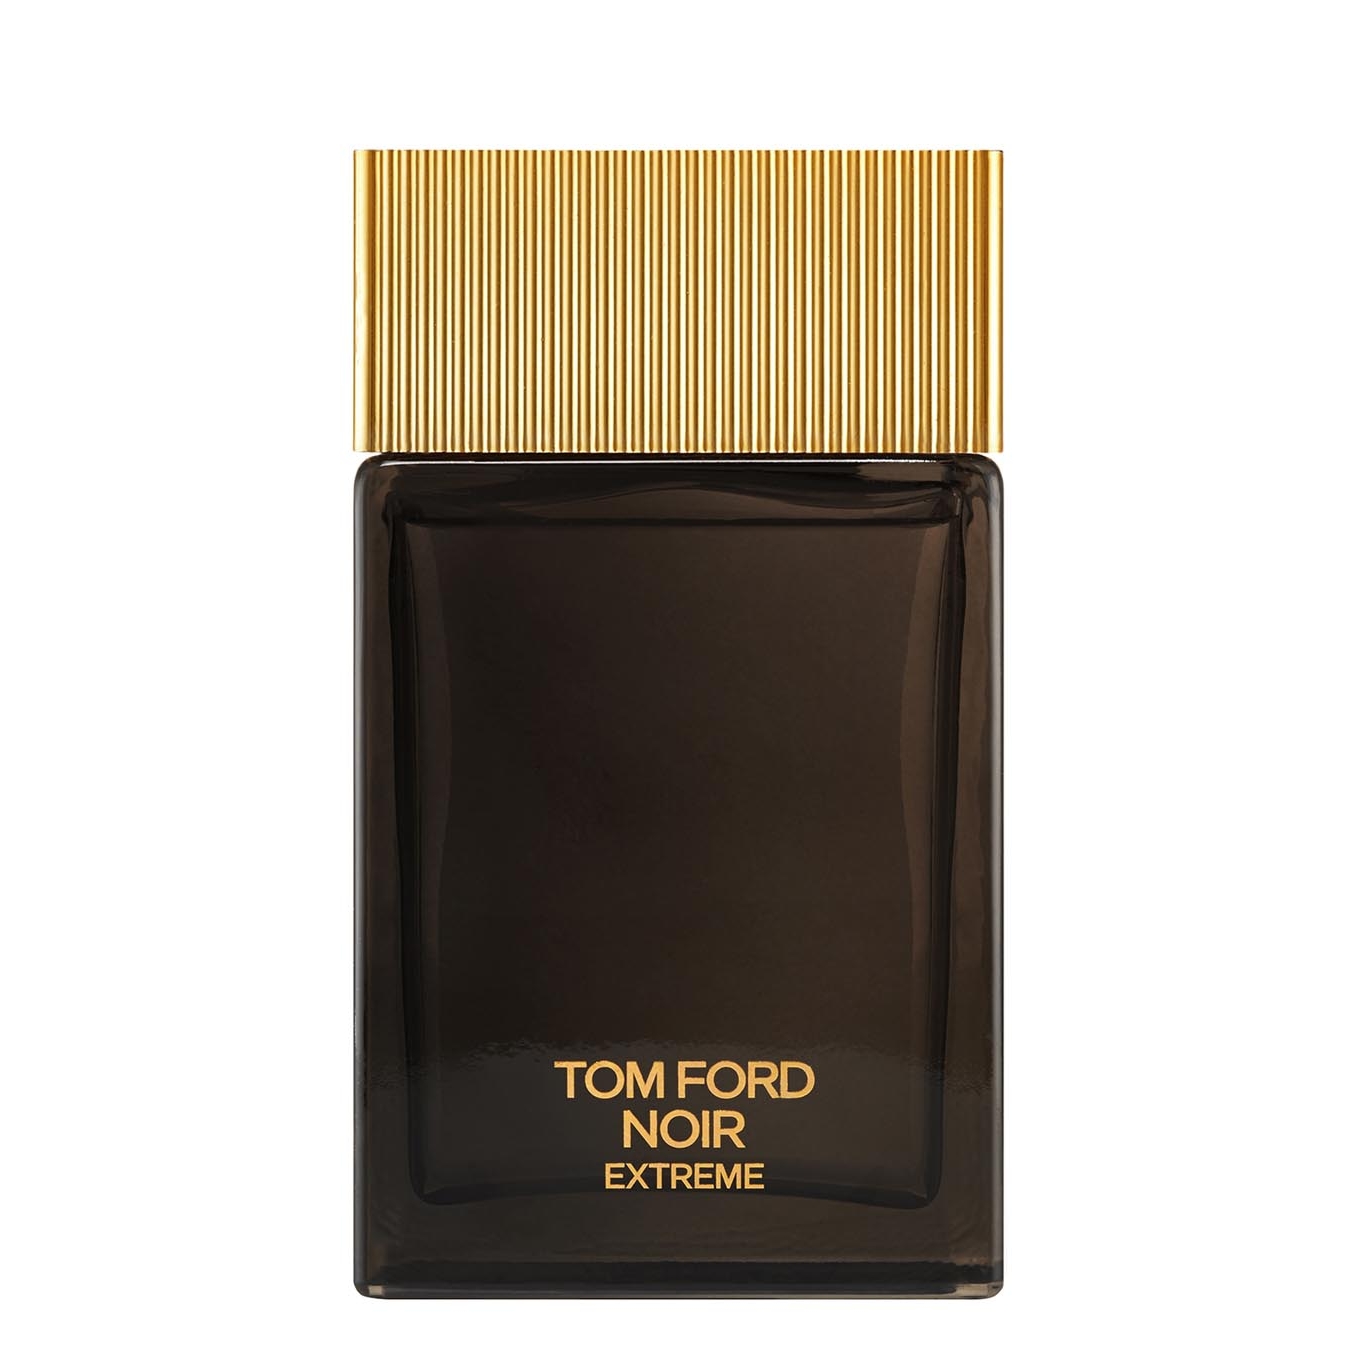 Tom Ford Noir Extreme Edp 100mL - Perfumes | Fragrances | Gift Sets ...